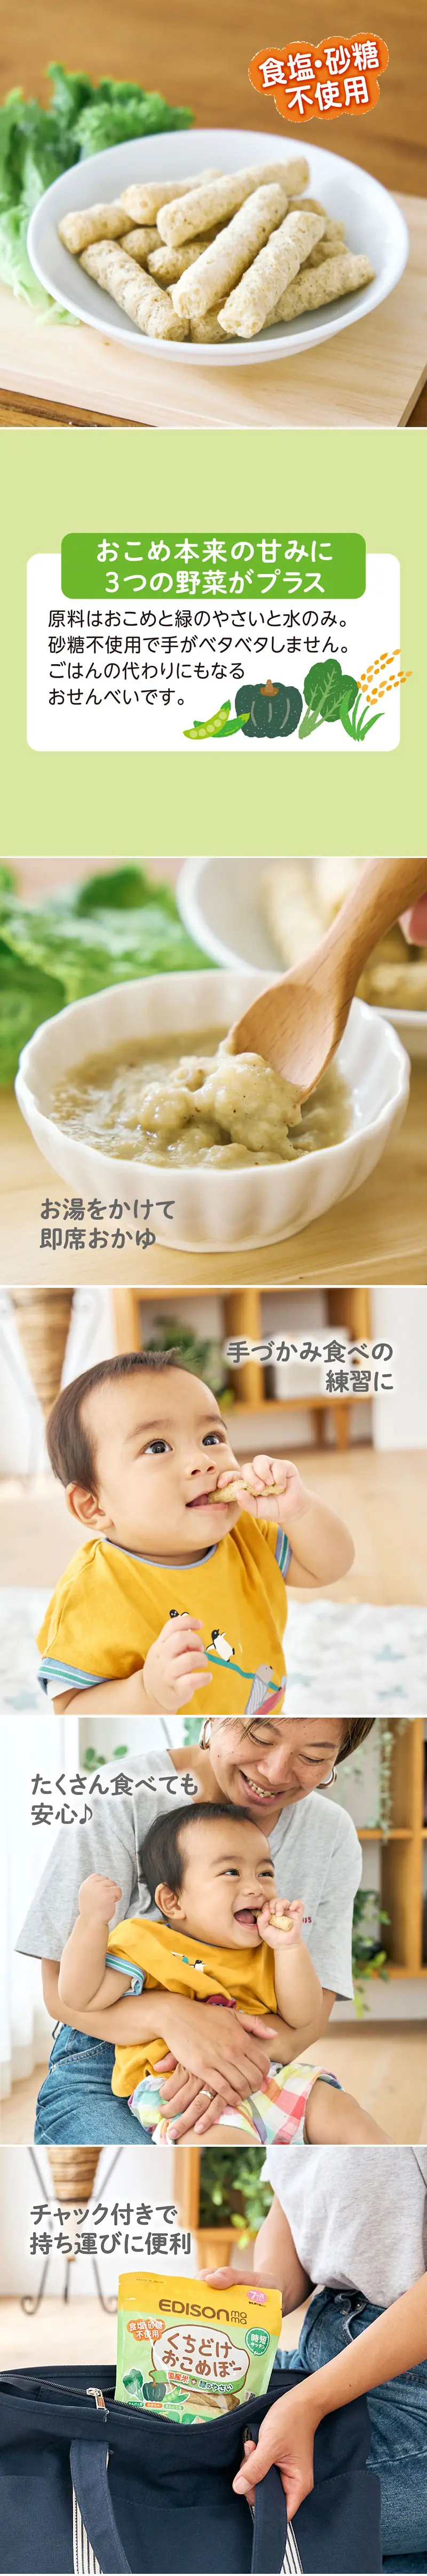 Edison 纯天然小米棒(日本大米制)-蔬菜味